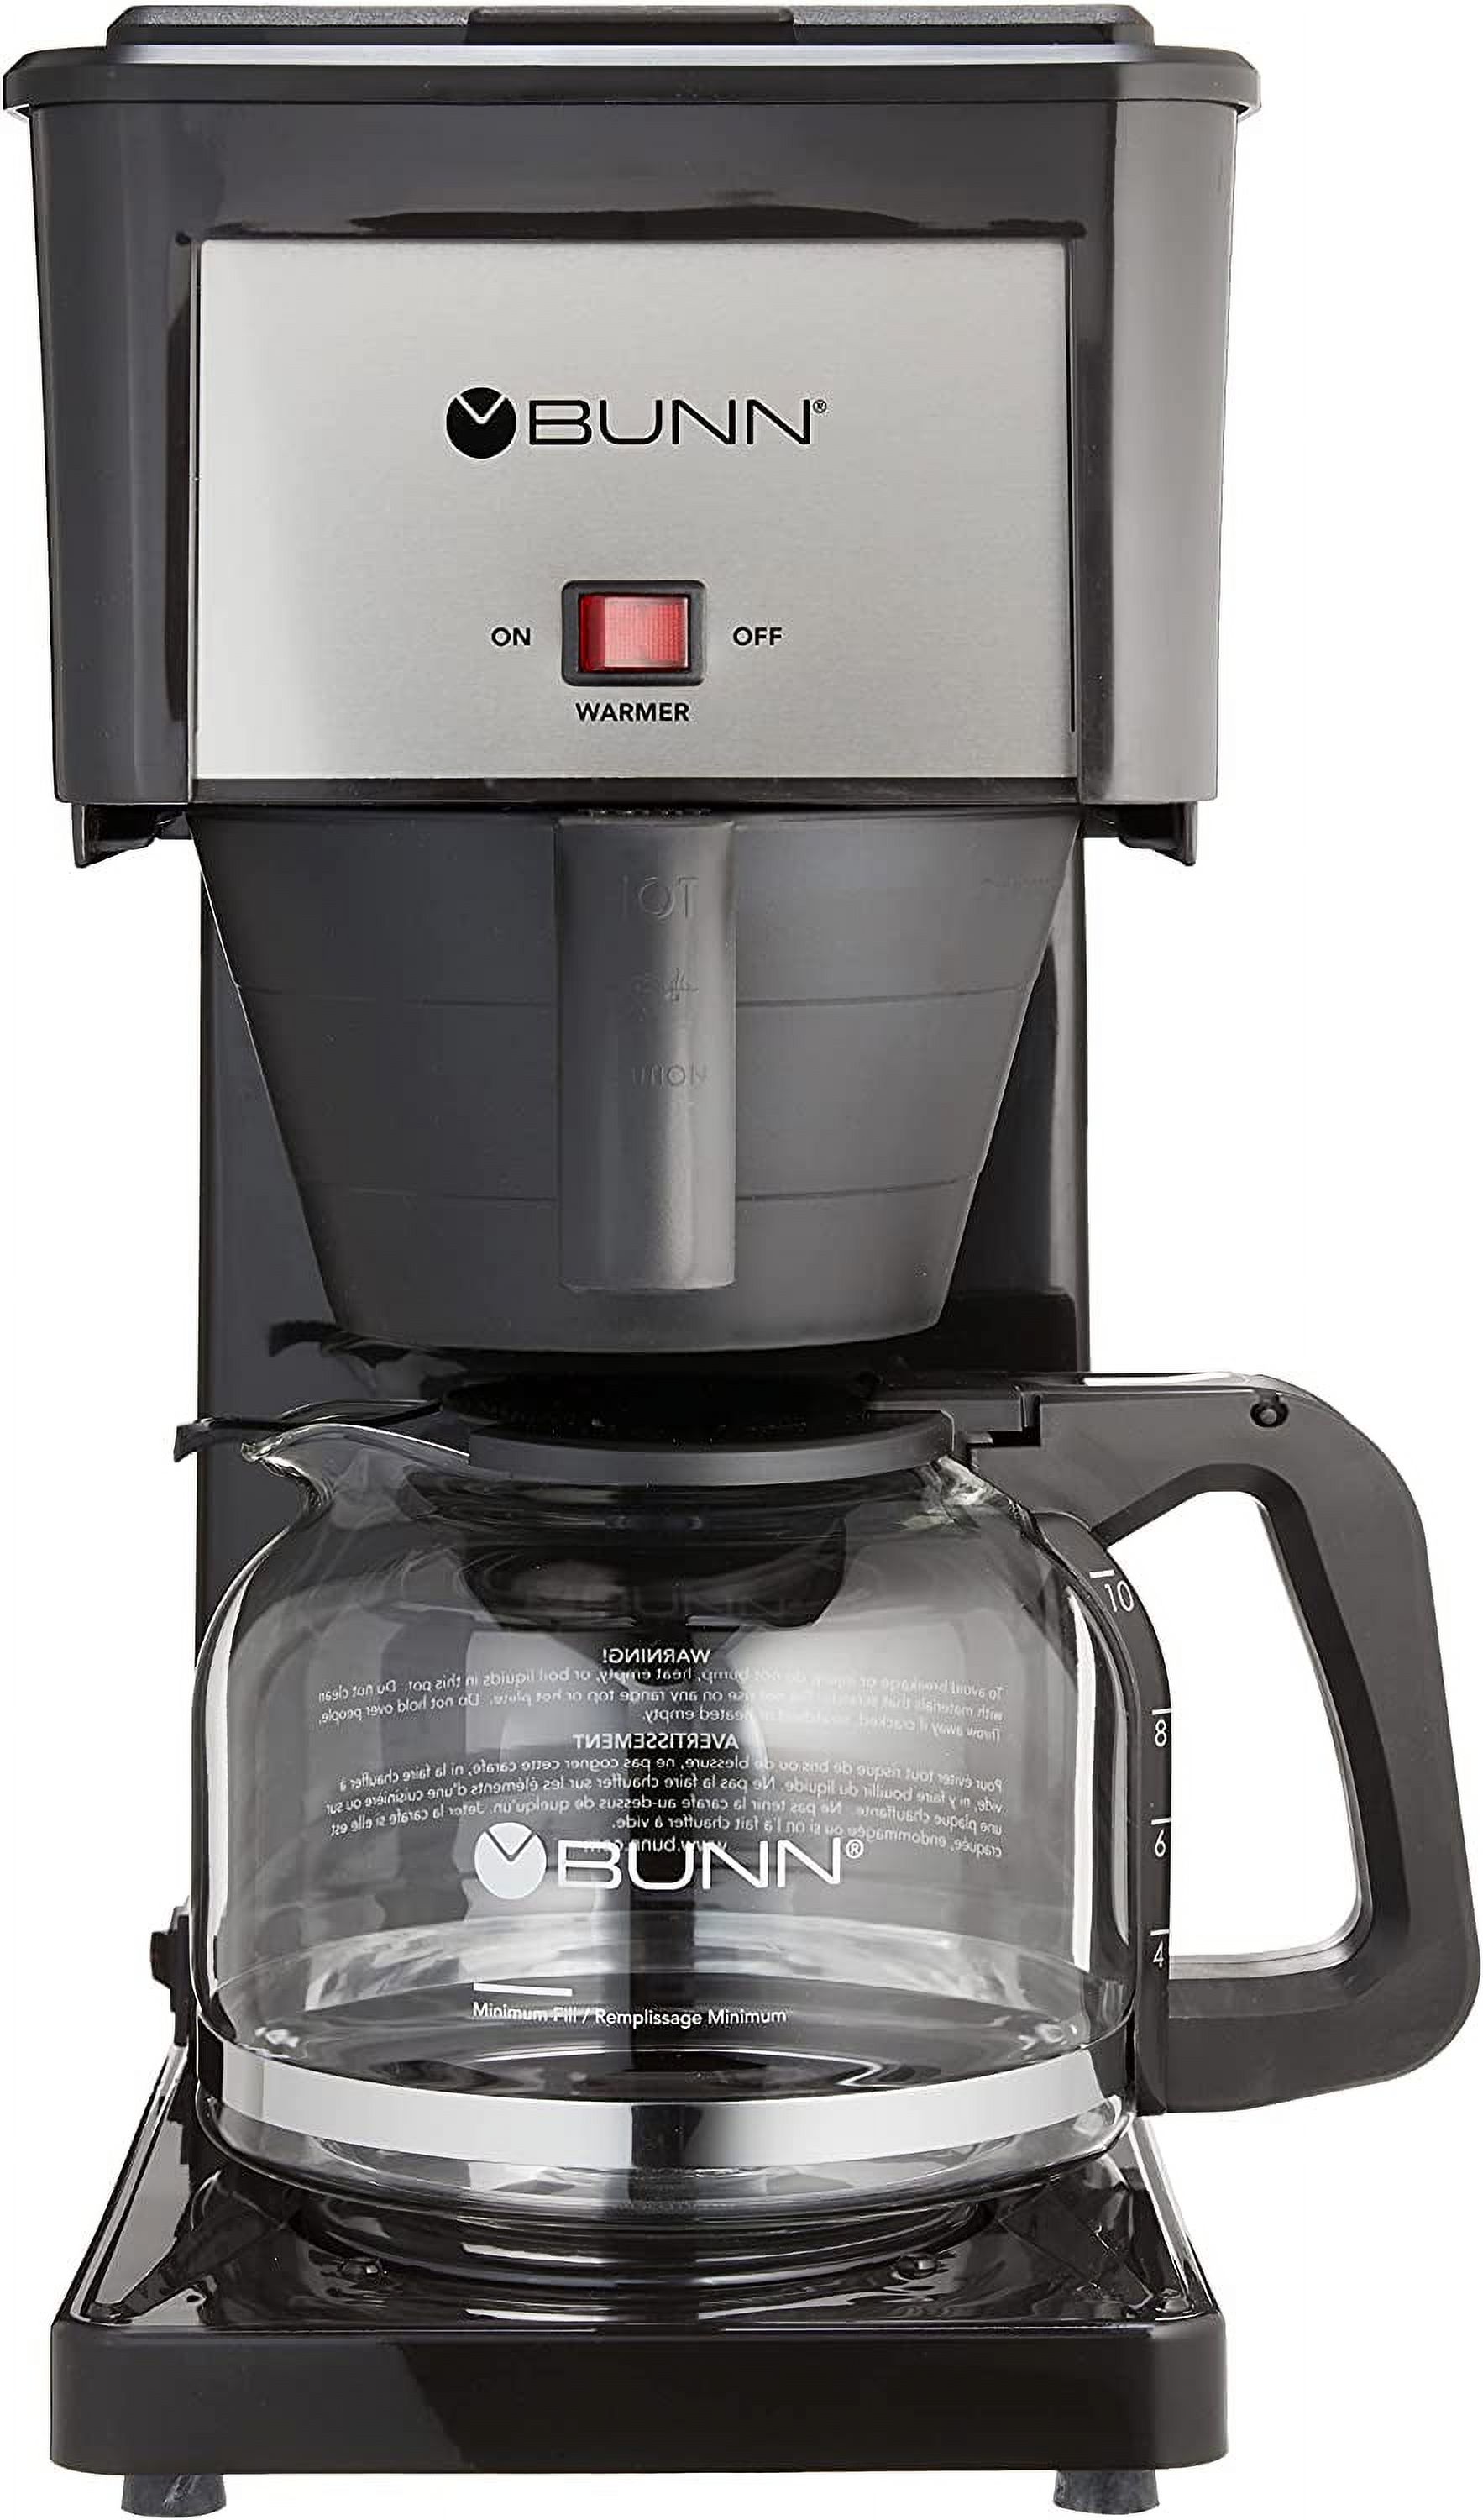 BUNN Black 10 Cup Drip Coffee Maker - image 1 of 15